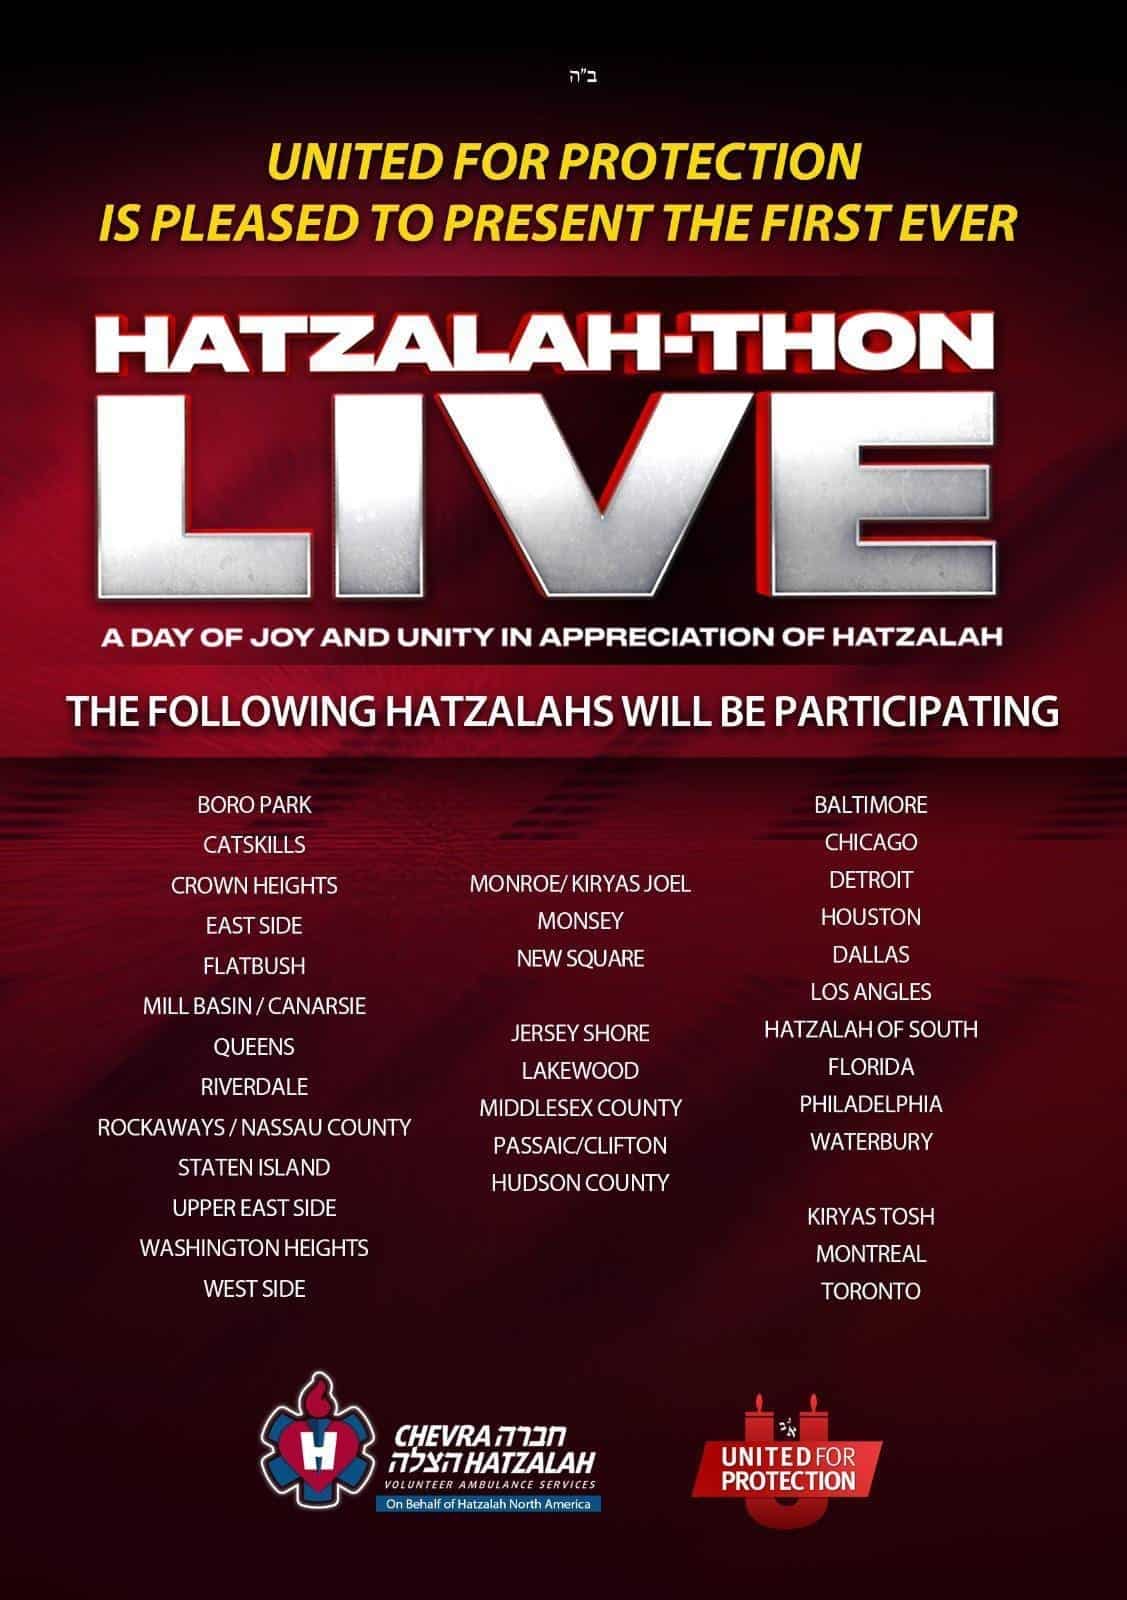 UnitedForProtection.com Presents Hatzalah-Thon Live on Lag B'Omer 3